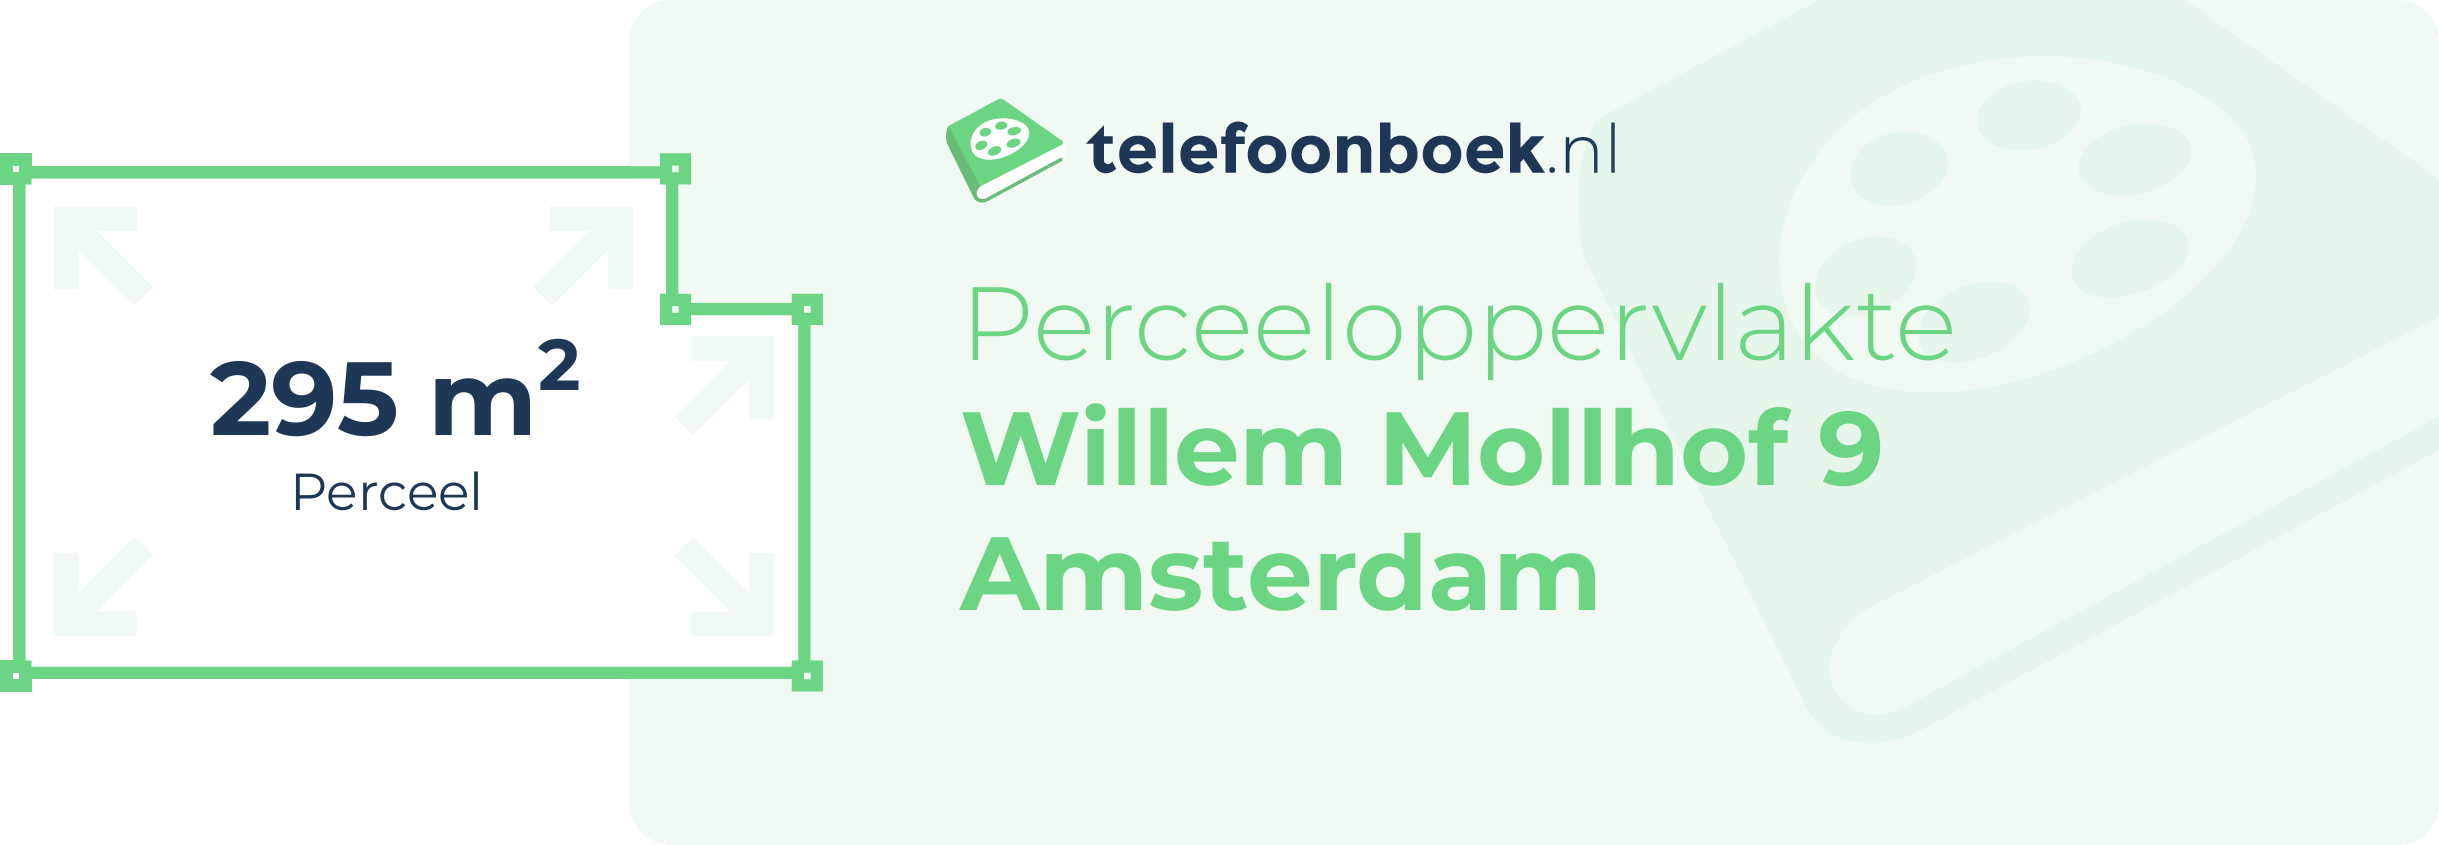 Perceeloppervlakte Willem Mollhof 9 Amsterdam